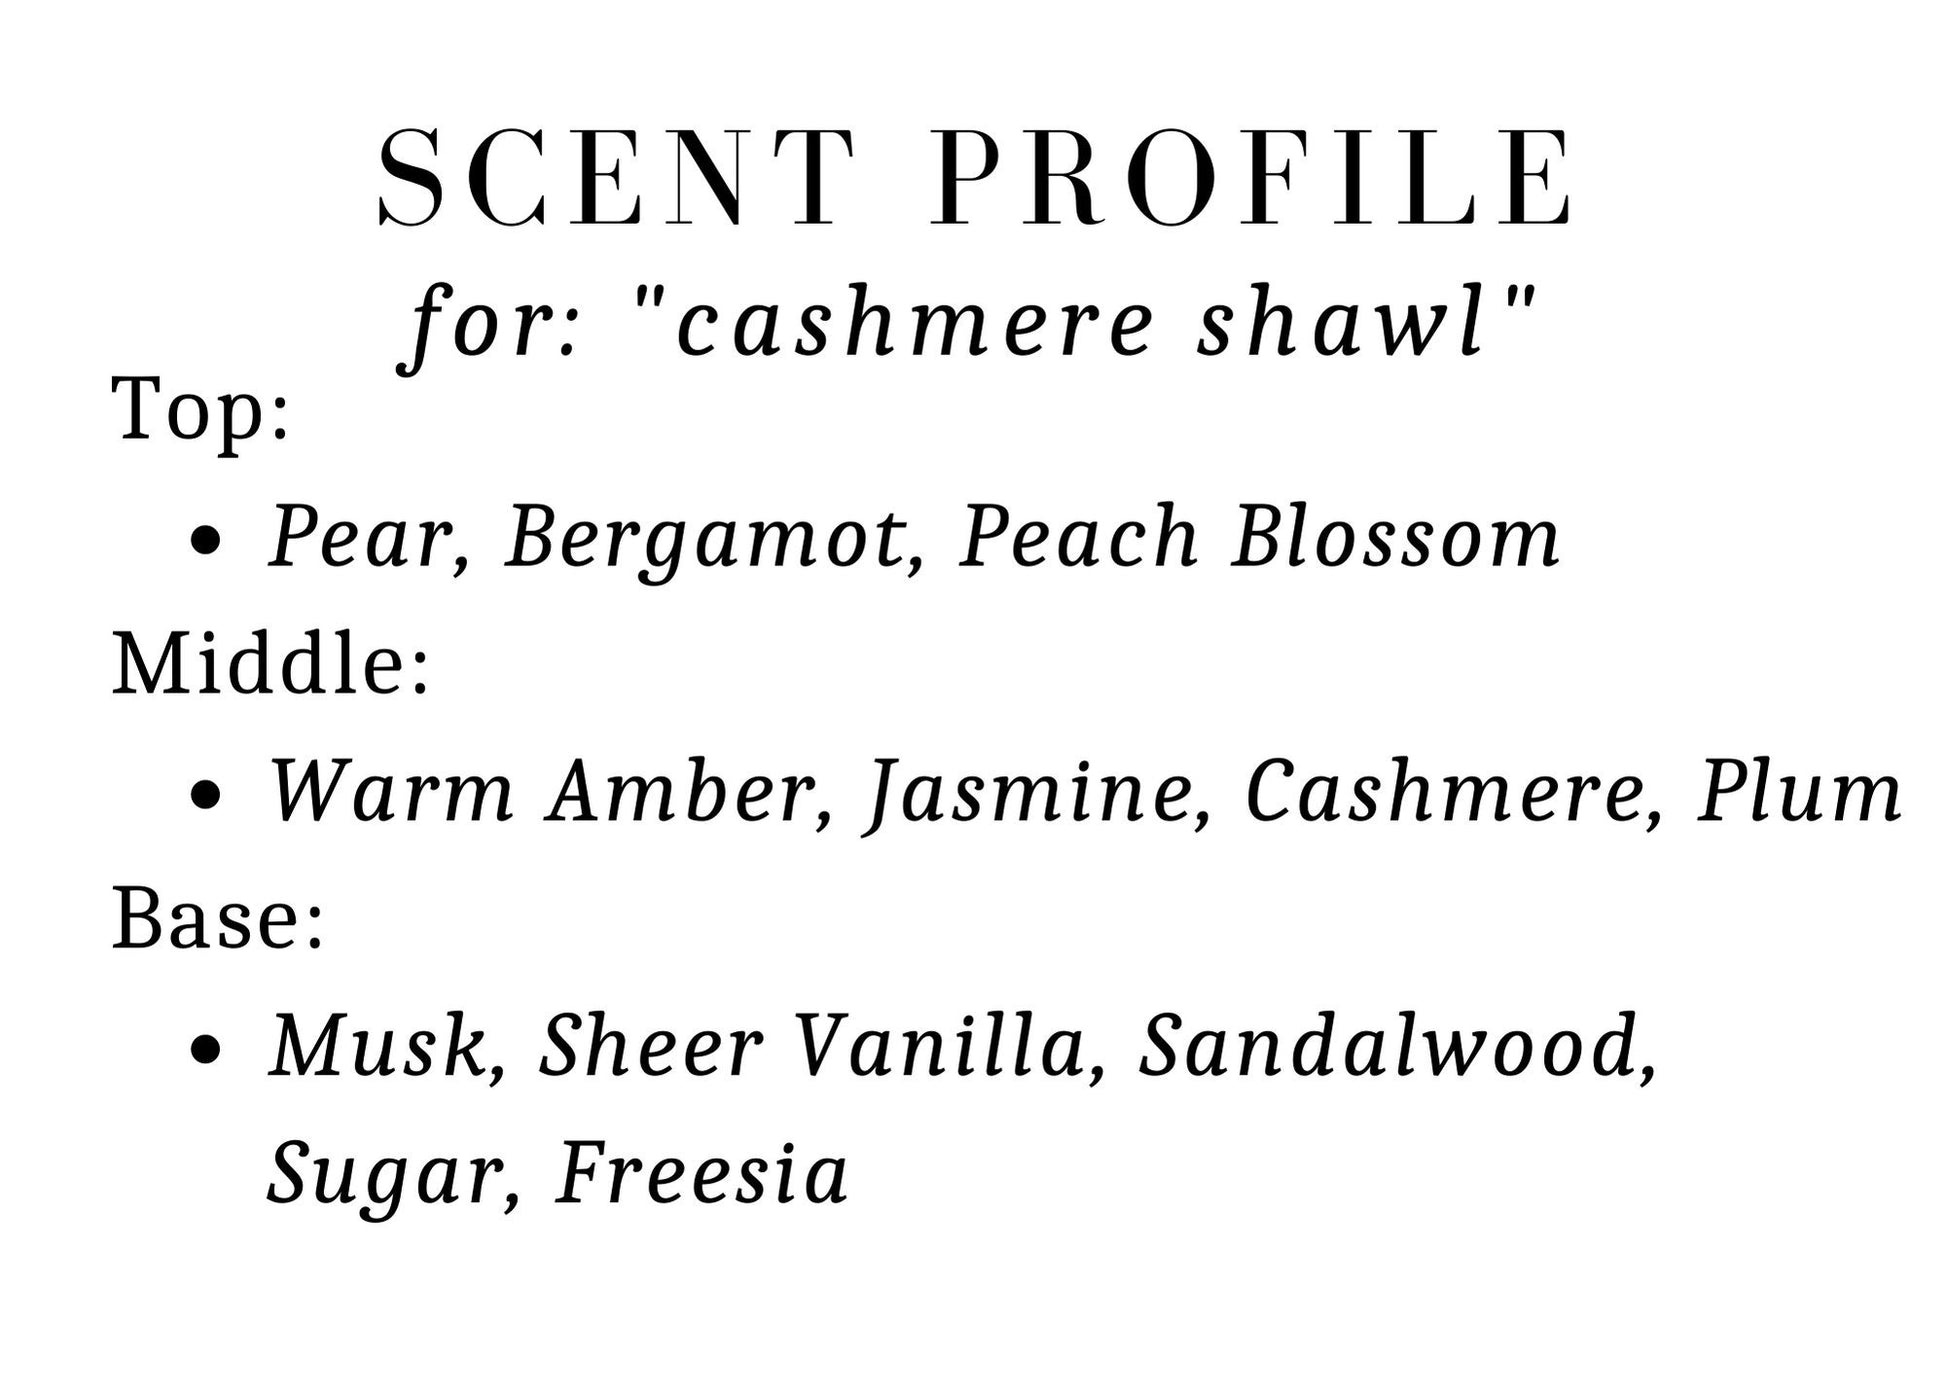 Scent profile card for cashmere shawl. Top: pear, bergamot, peach blossom. Middle: warm amber, jasmine, cashmere, plum. Base: musk, sheer vanilla, sandalwood, sugar, freesia. 